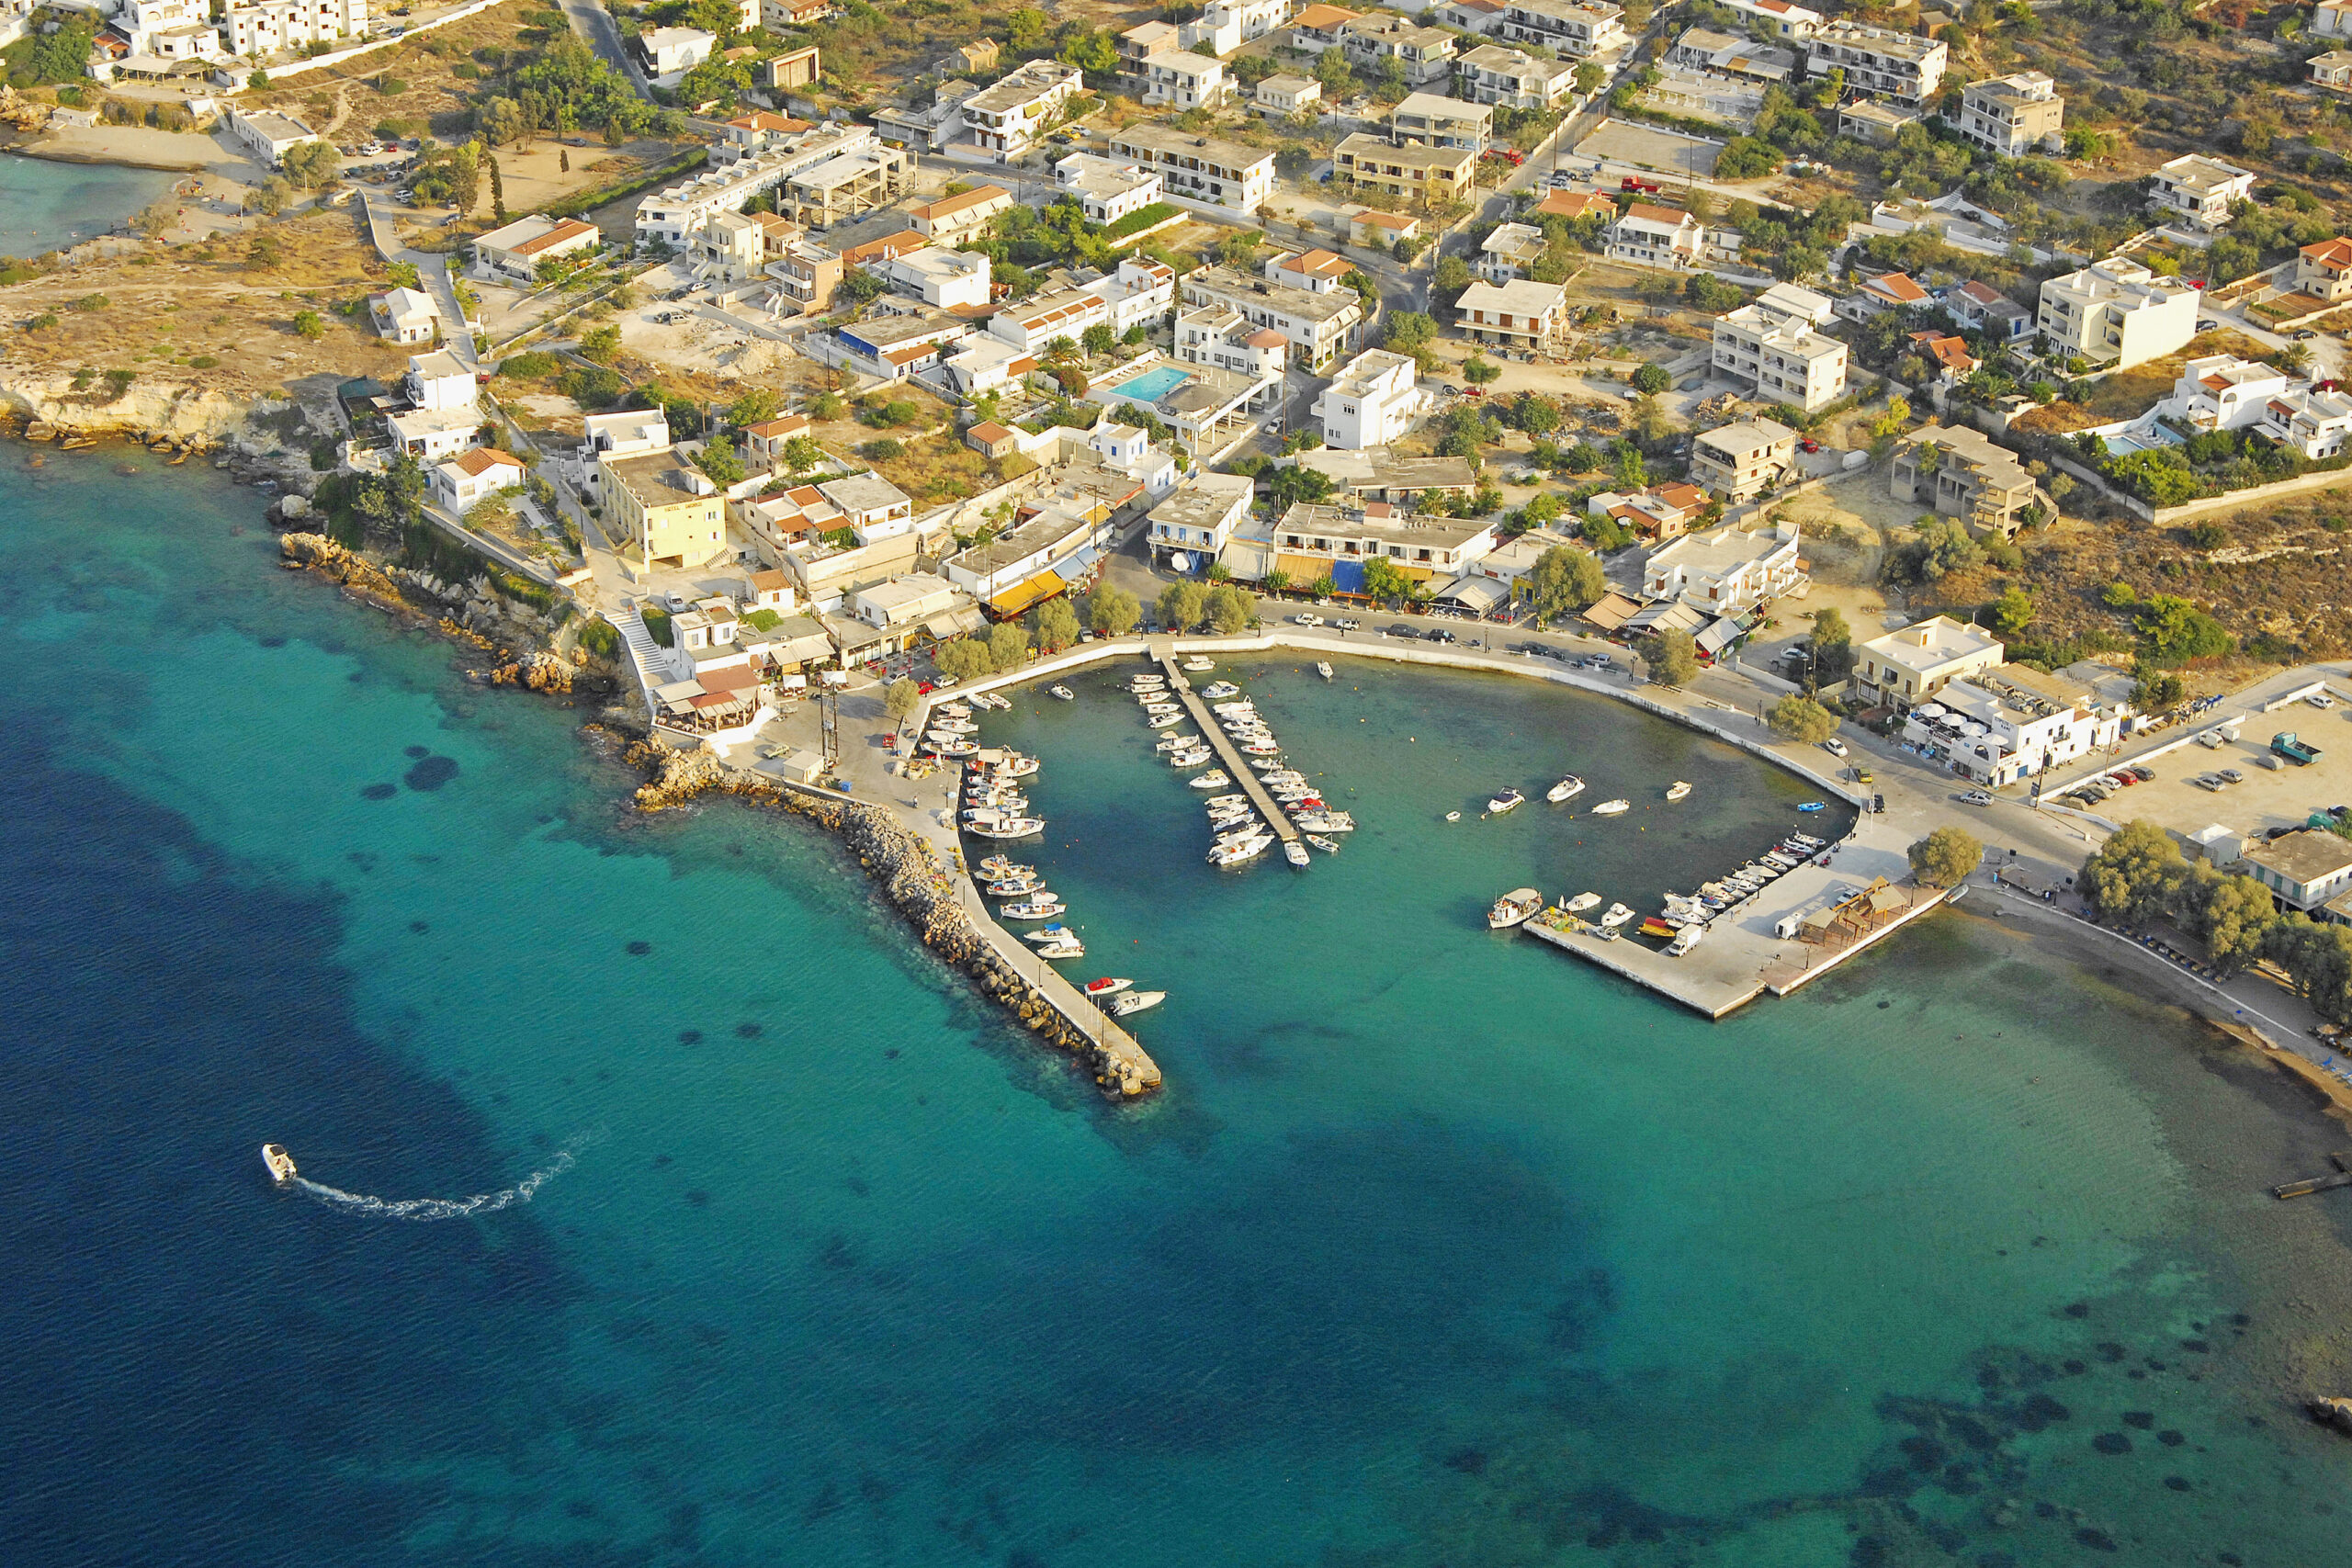 Aerial view of the mini harbor of Souvala village on the north coast of Aegina Island
- Copyrights marinas.com